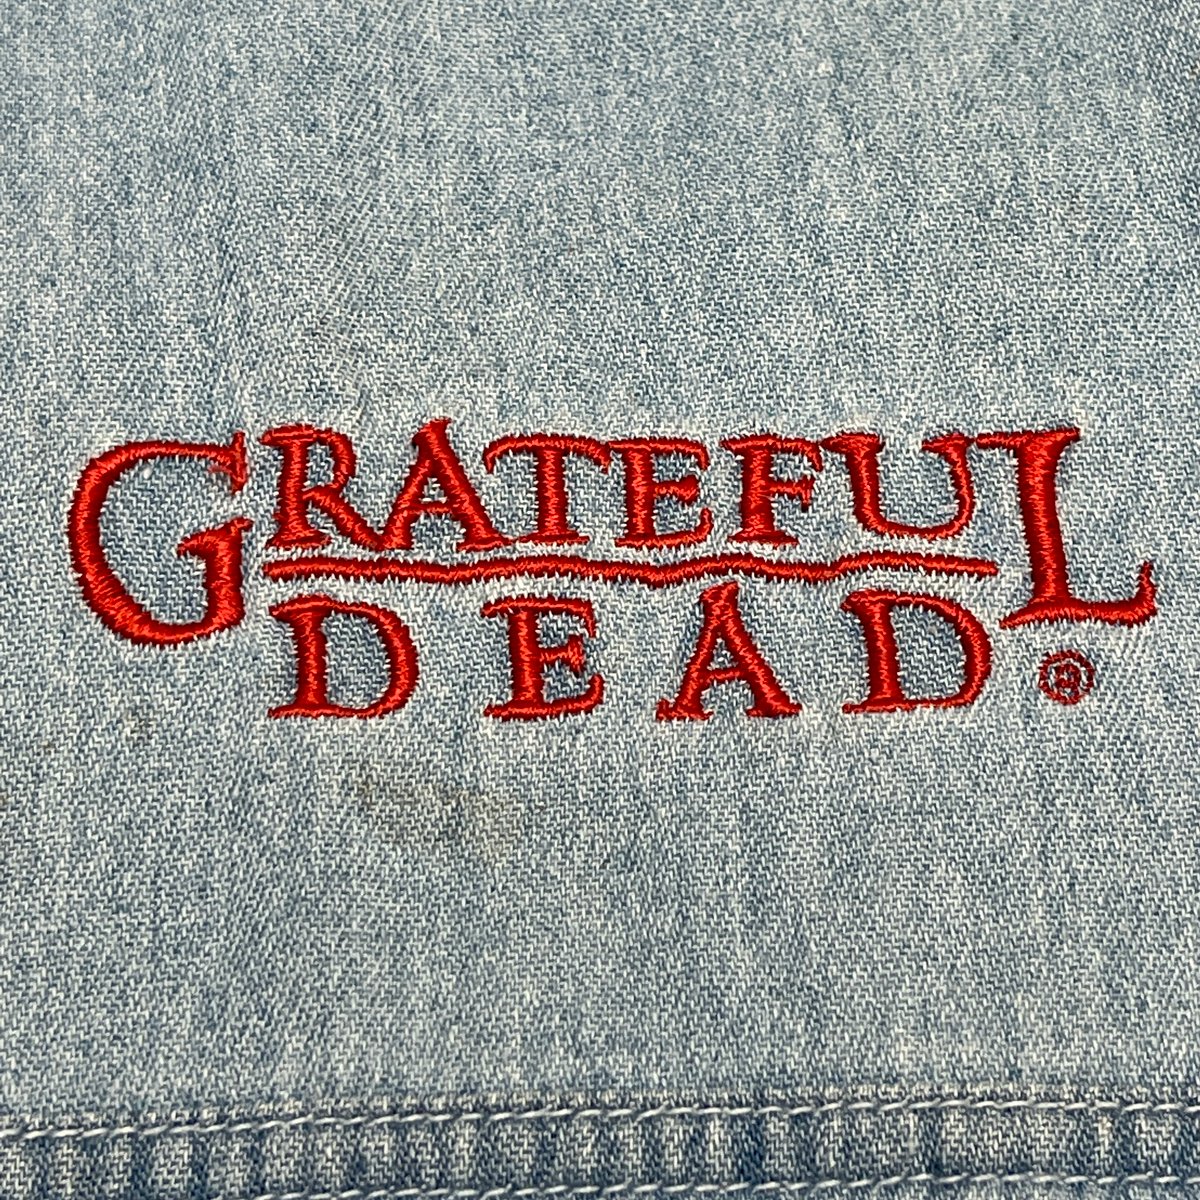 Original Vintage Grateful Dead Crew 90’s Embroidered Denim Long Sleeve!!! Tagged Large. Fits XL!!